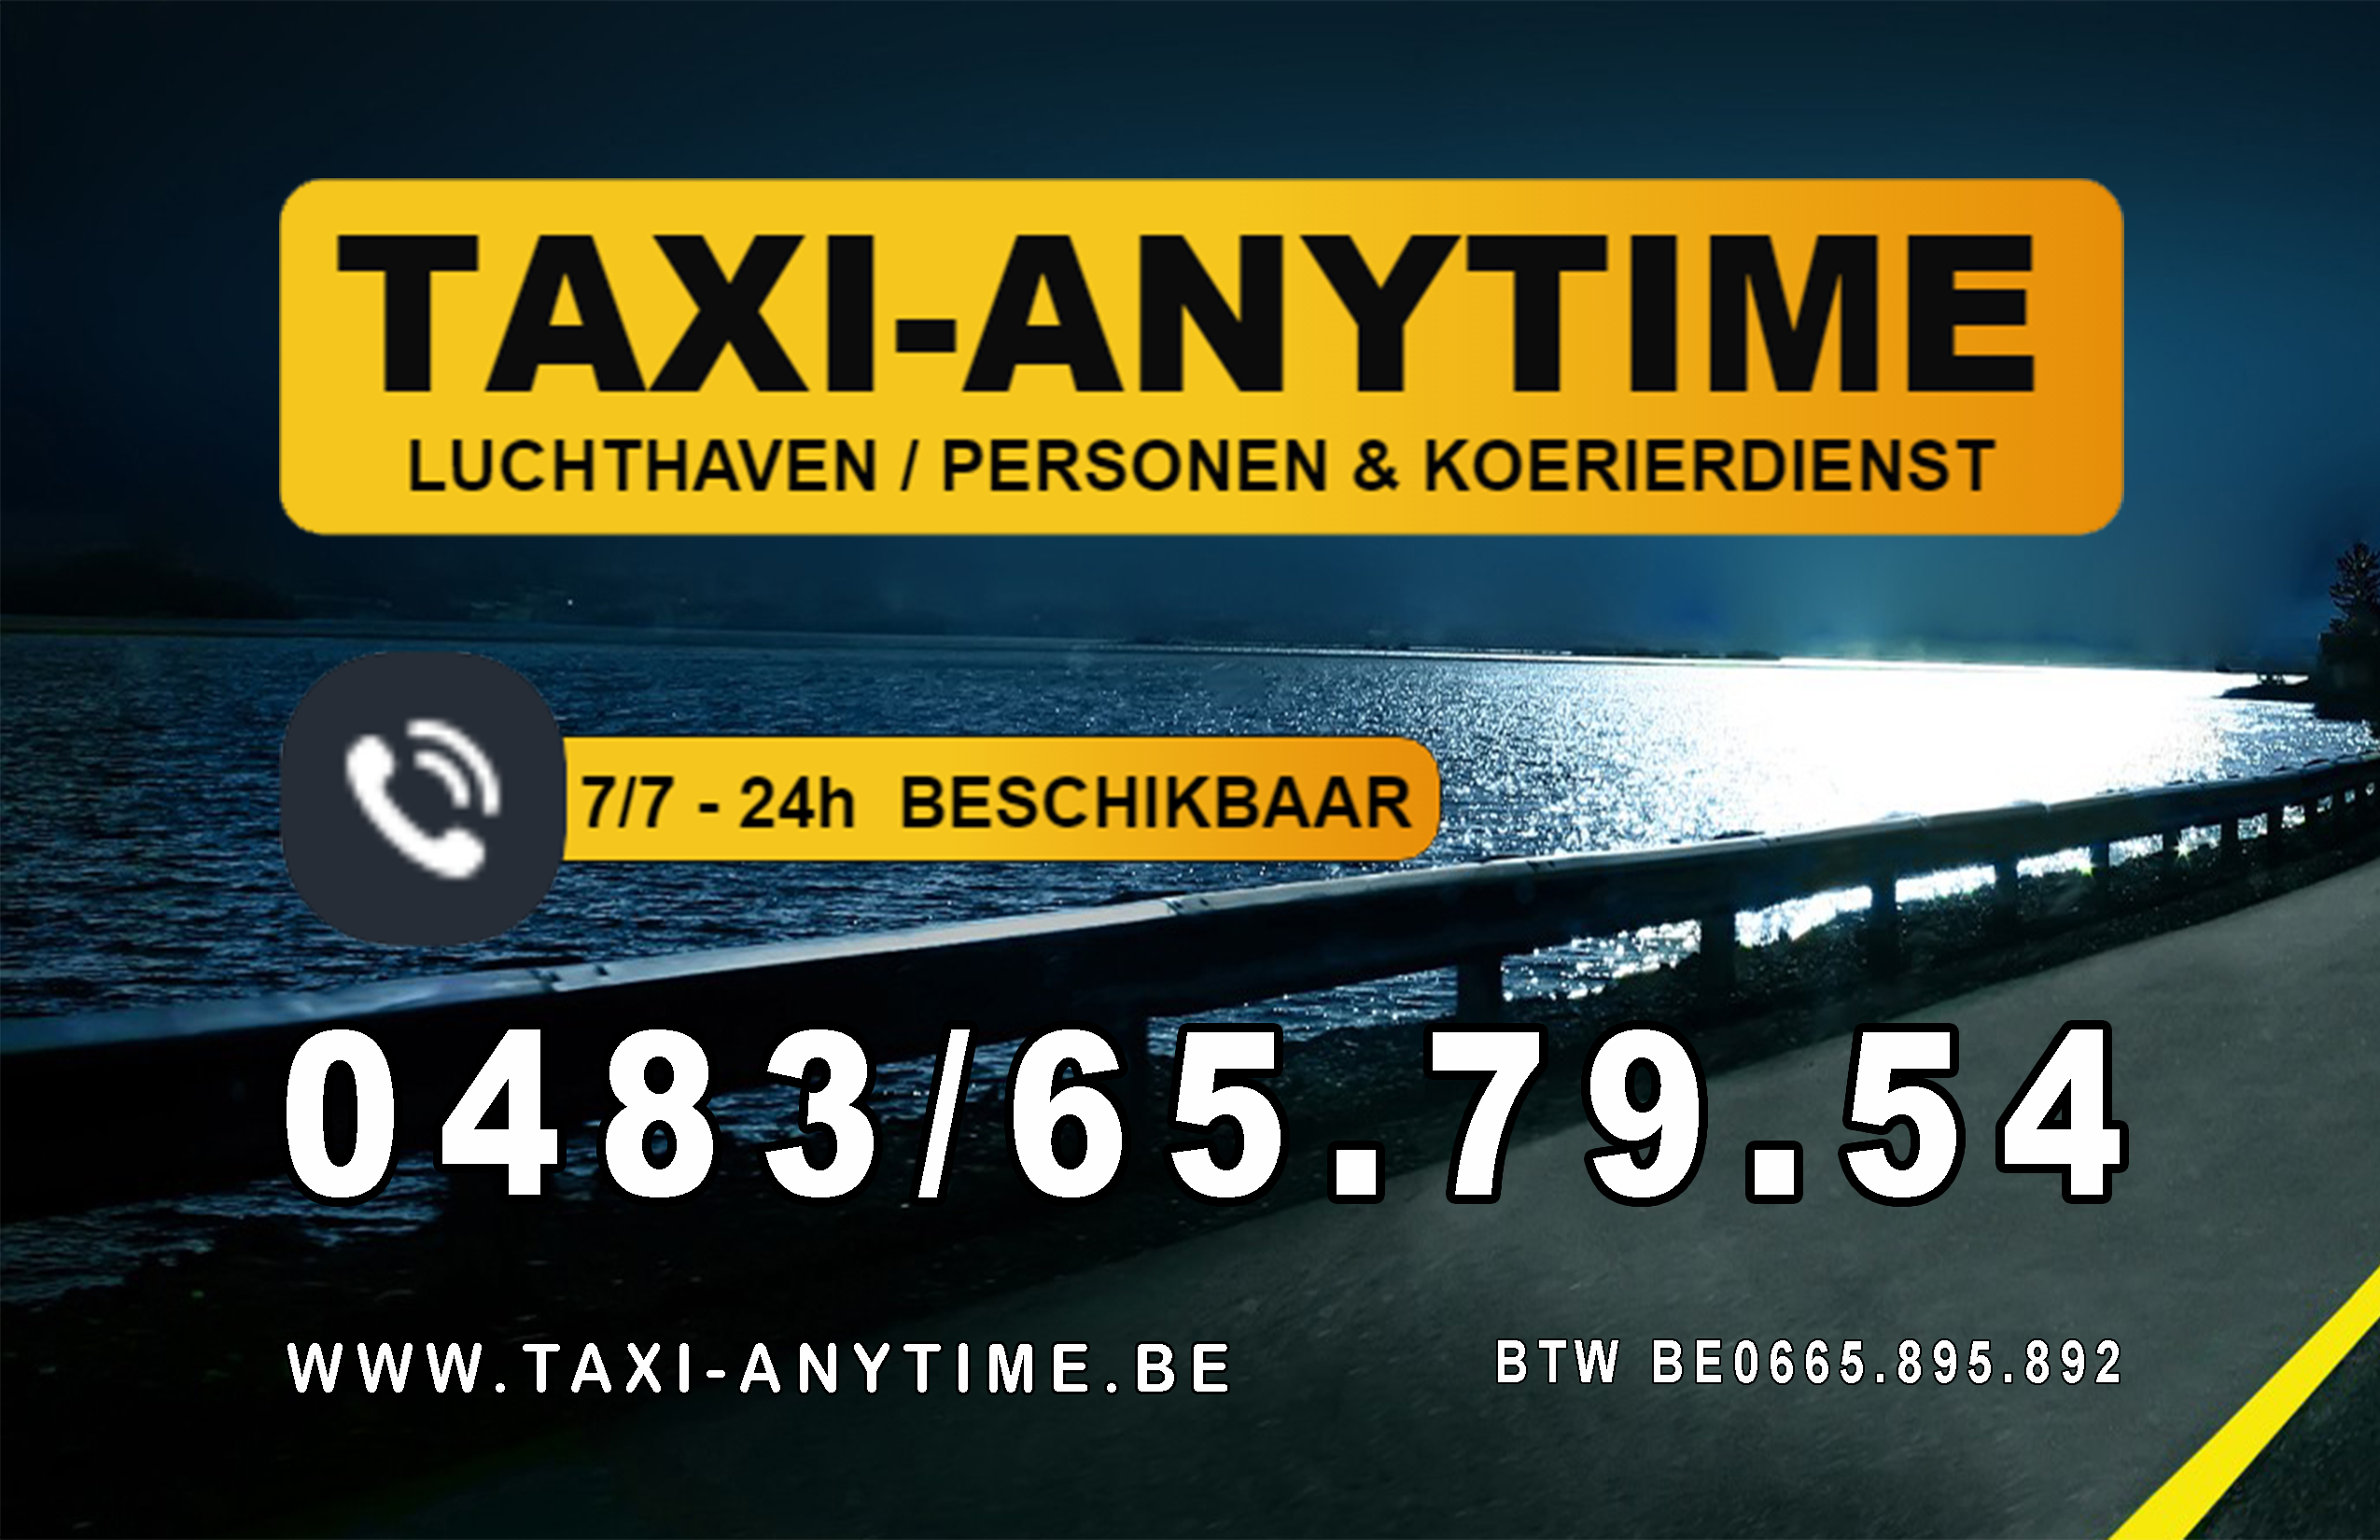 taxibedrijven met luchthavenvervoer Denderhoutem Taxi-anytime